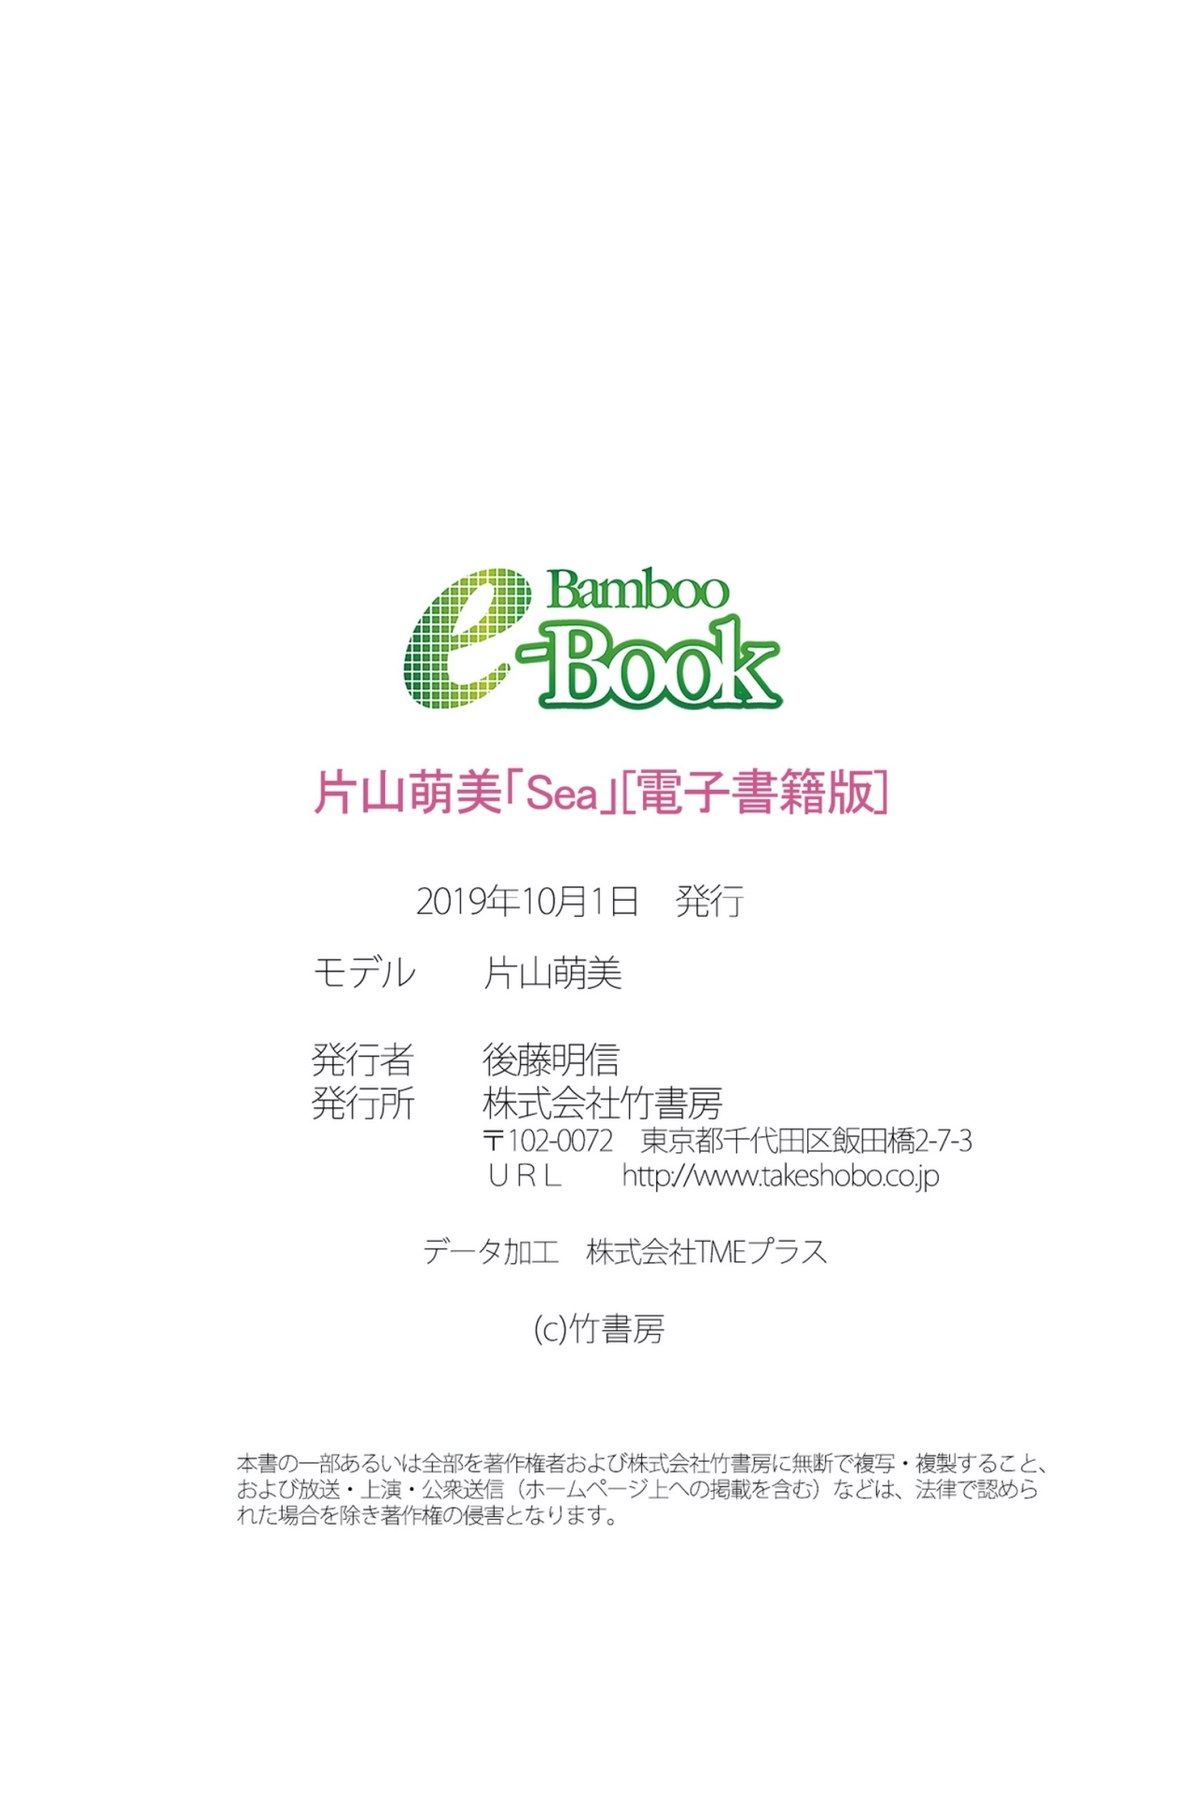 Bamboo e Book 2019 10 04 Moemi Katayama 片山萌美 Sea 0060 7756077069.jpg